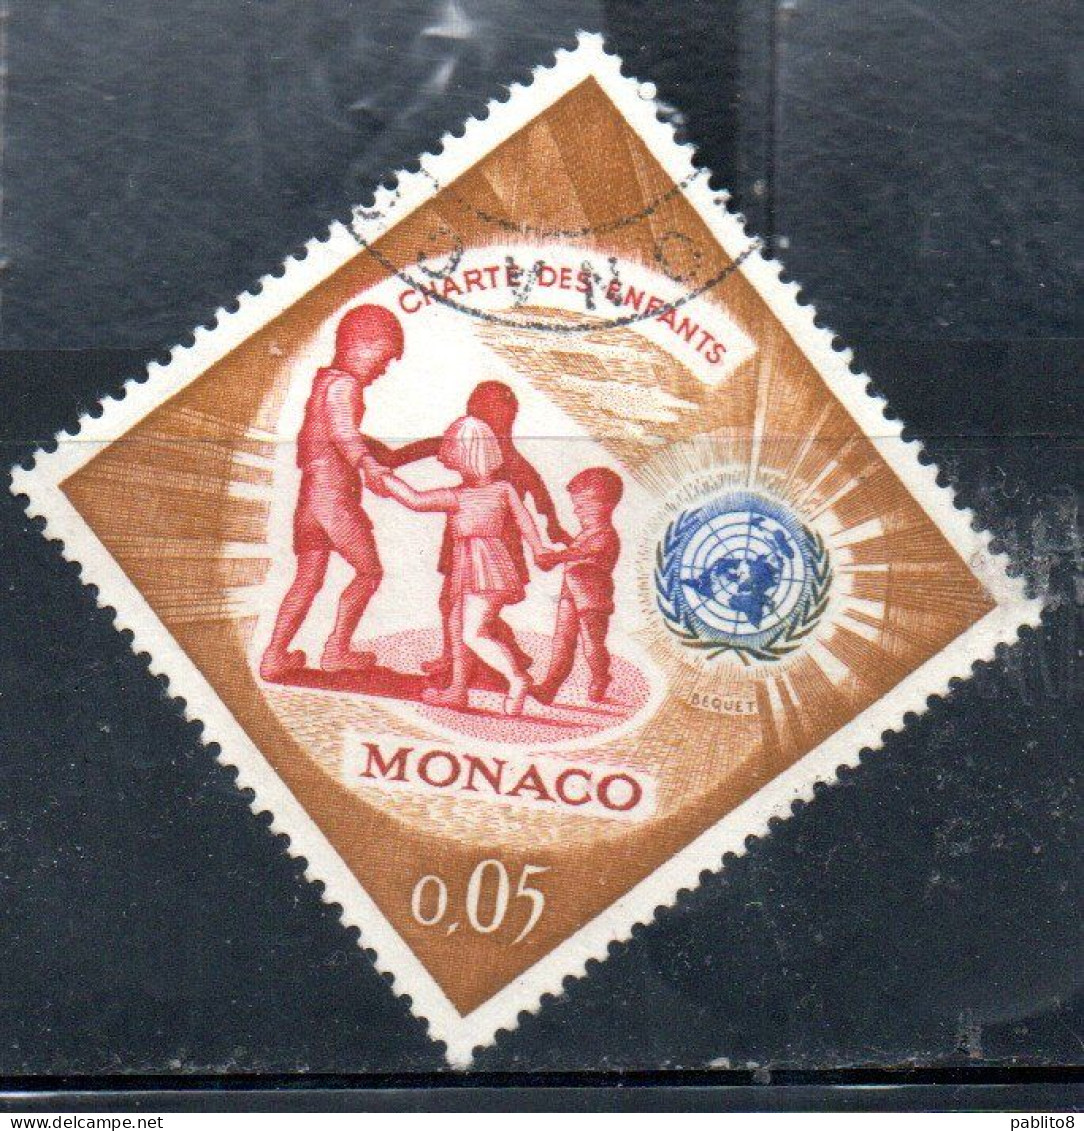 MONACO 1963 UN ONU CHILDREN' CHARTER DANCING AND UN ONU EMBLEM 5c USED USATO OBLITERE' - Used Stamps